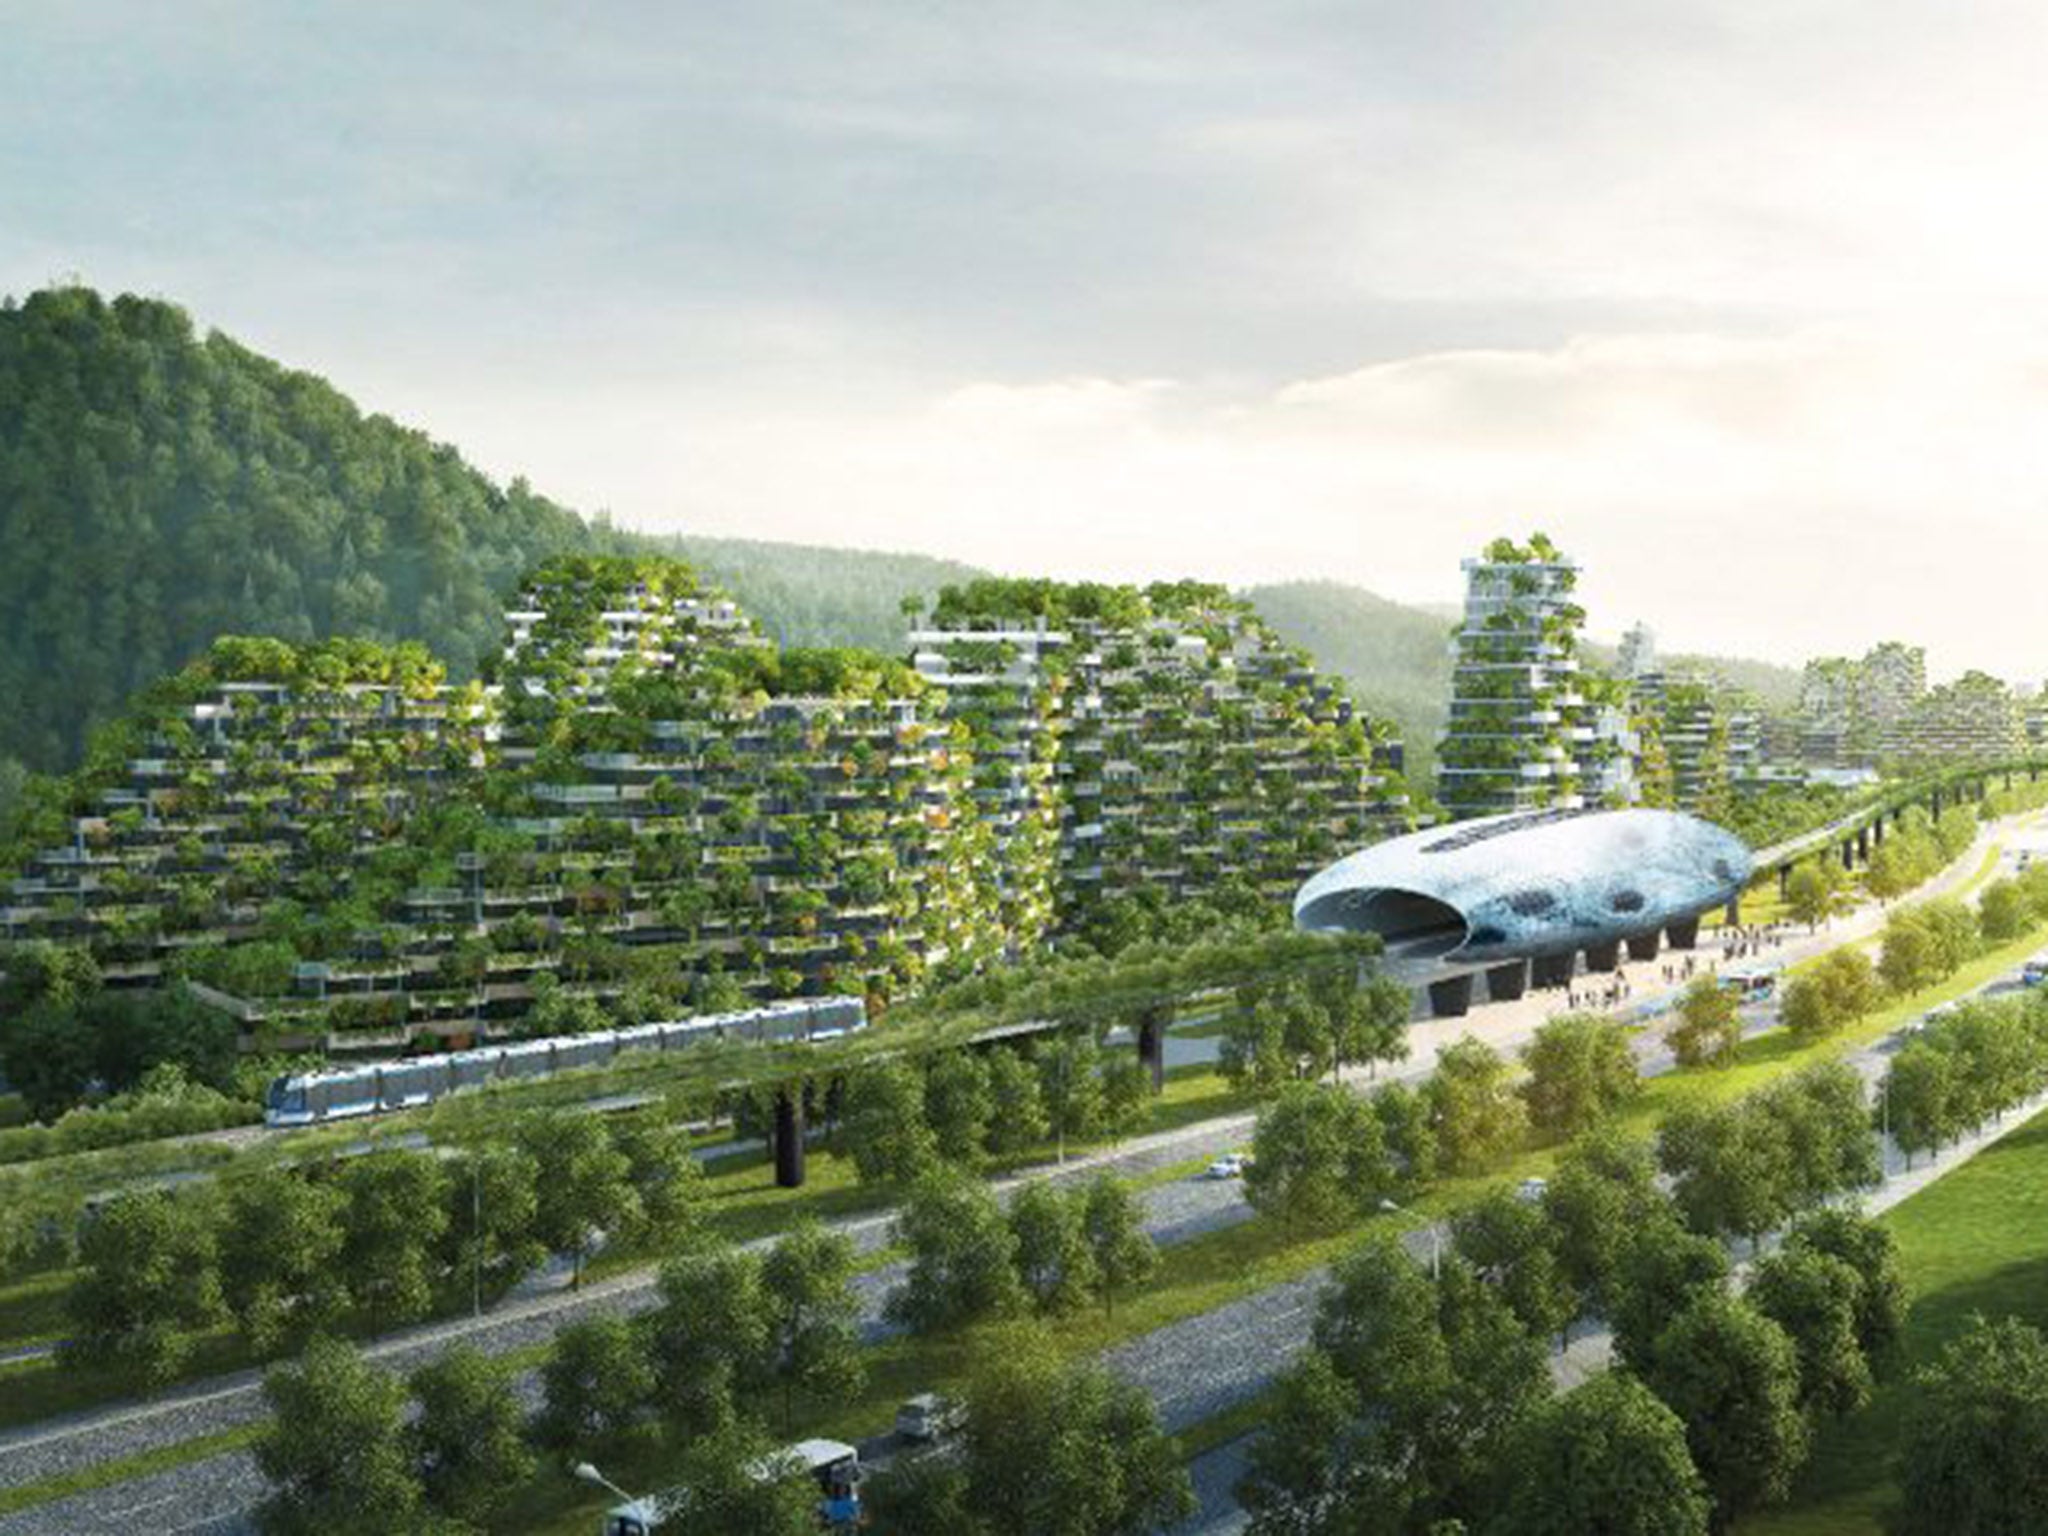 Liuzhou forest city, designed by Boeri